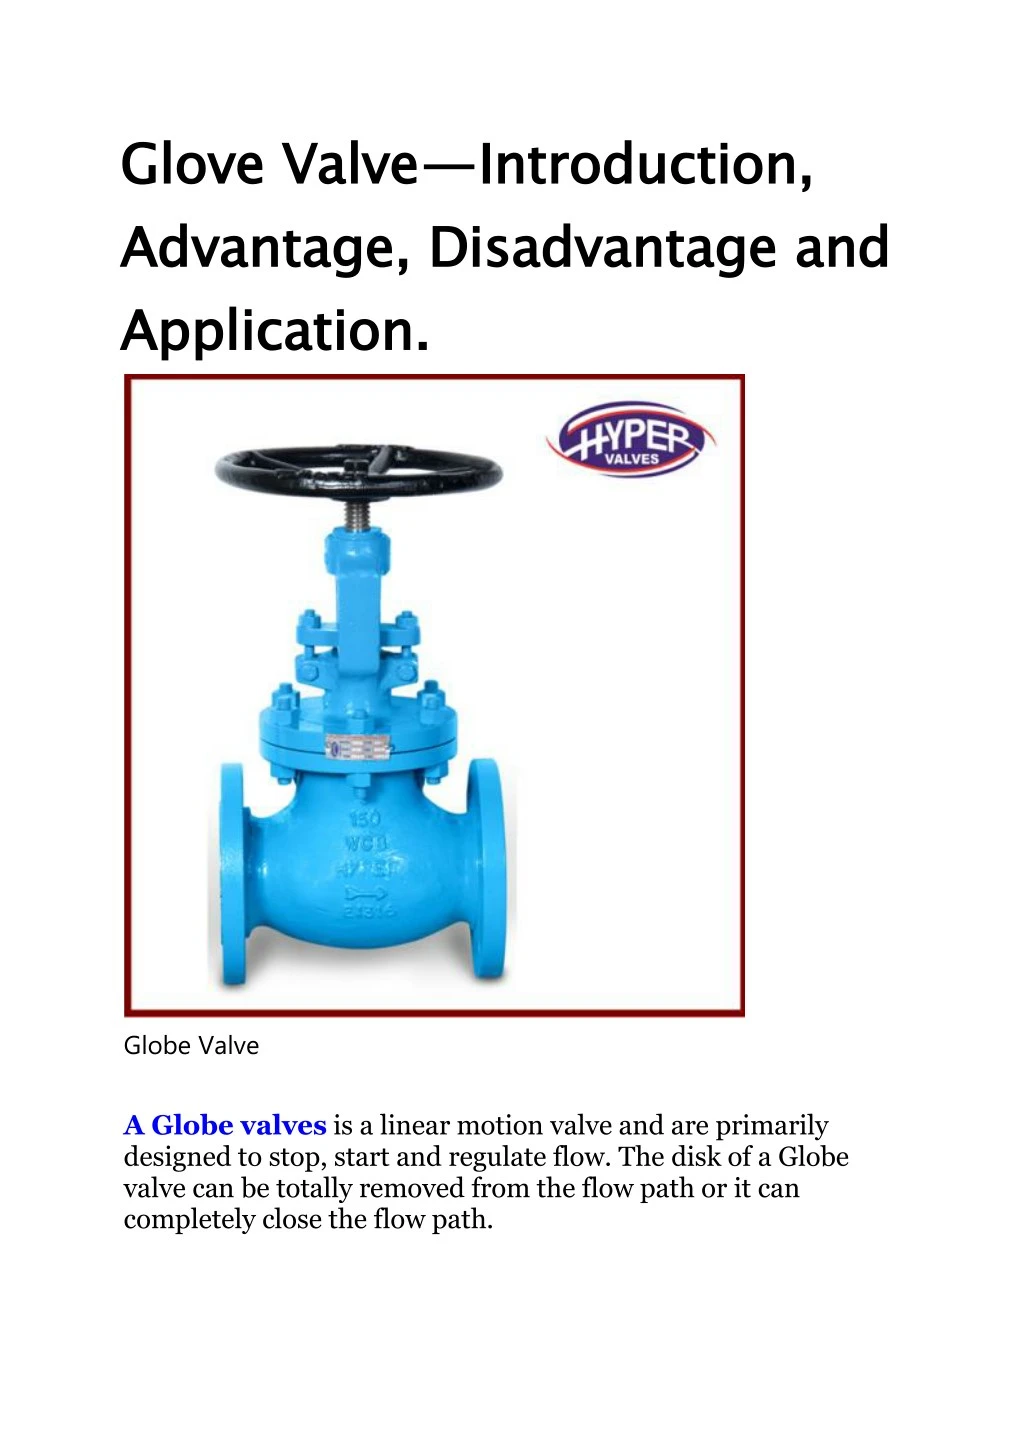 glove valve advantage disadvantage and application